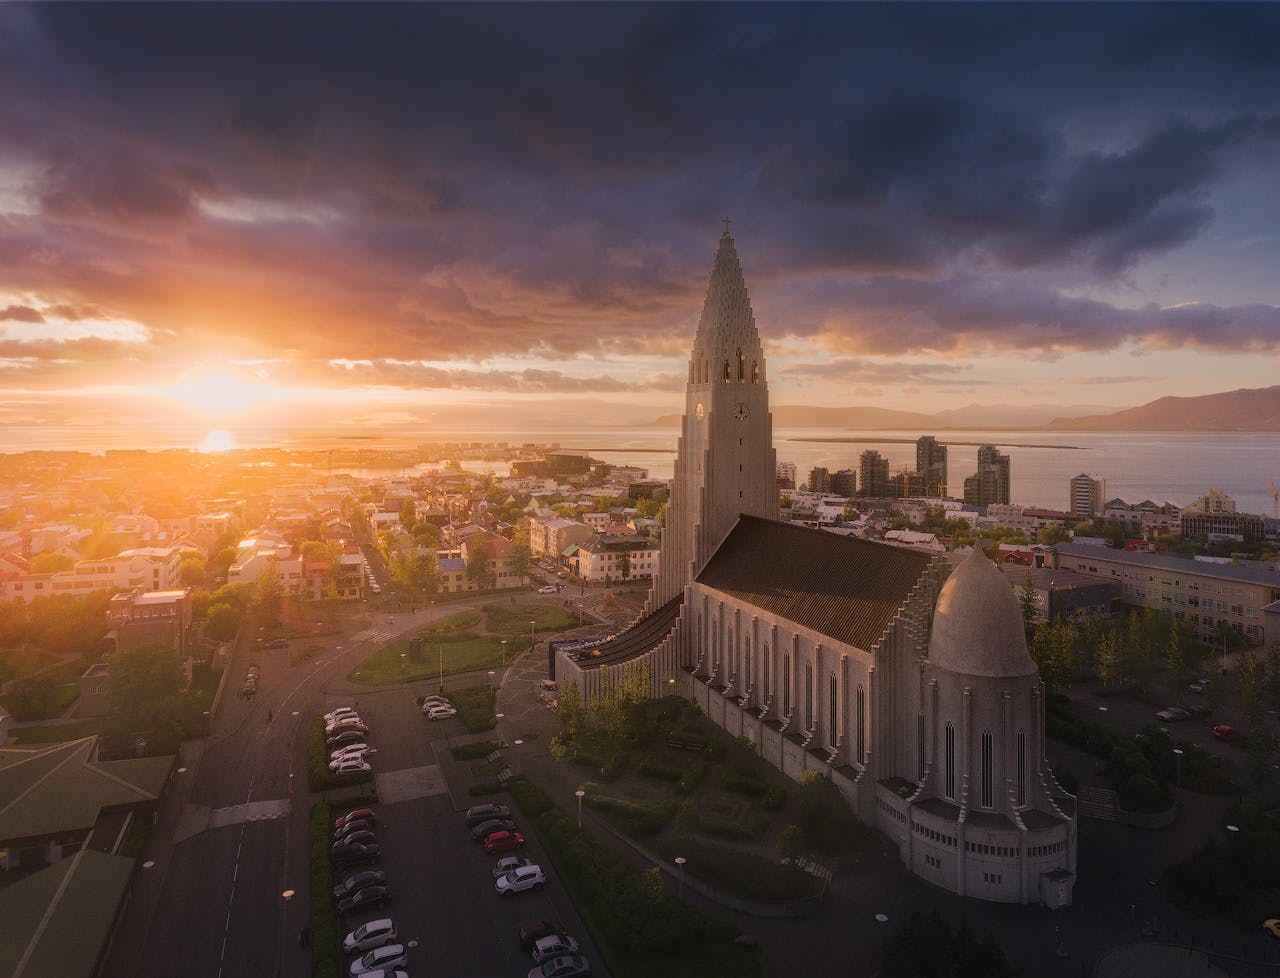 Hallgrimskirkja is a Lutheran Church in Iceland's capital.